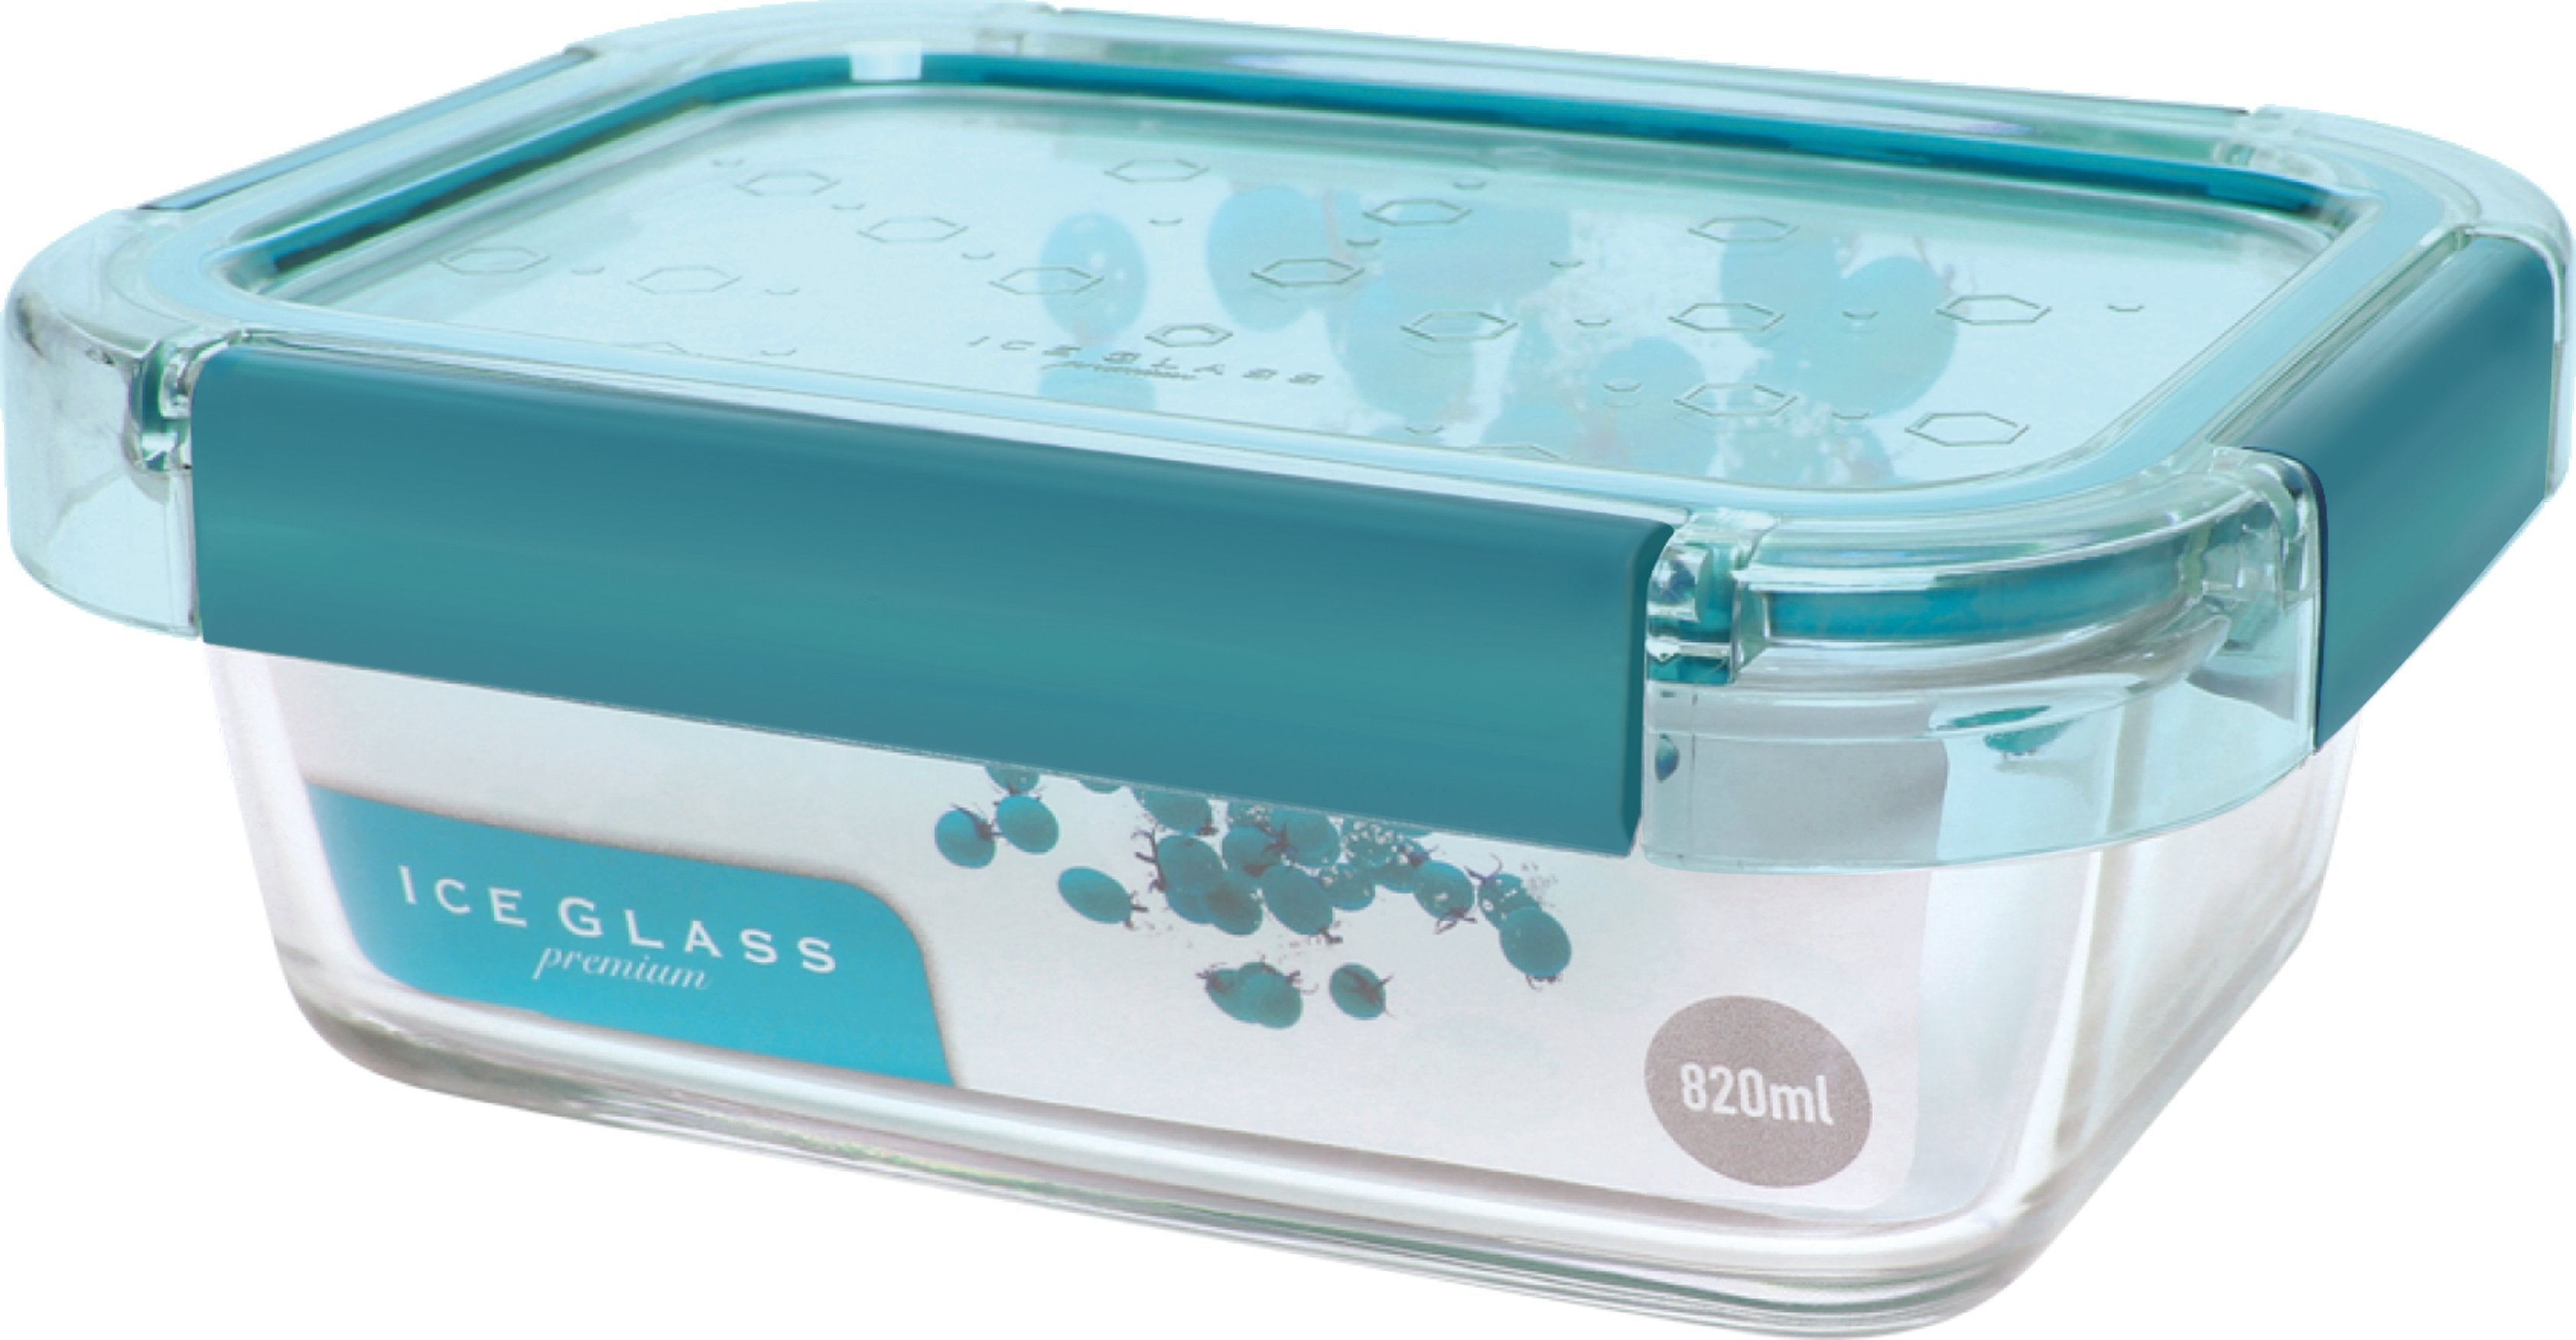 Komax Ice Glass Premium Rectangular Food Storage Container, 820 ml (Mint)